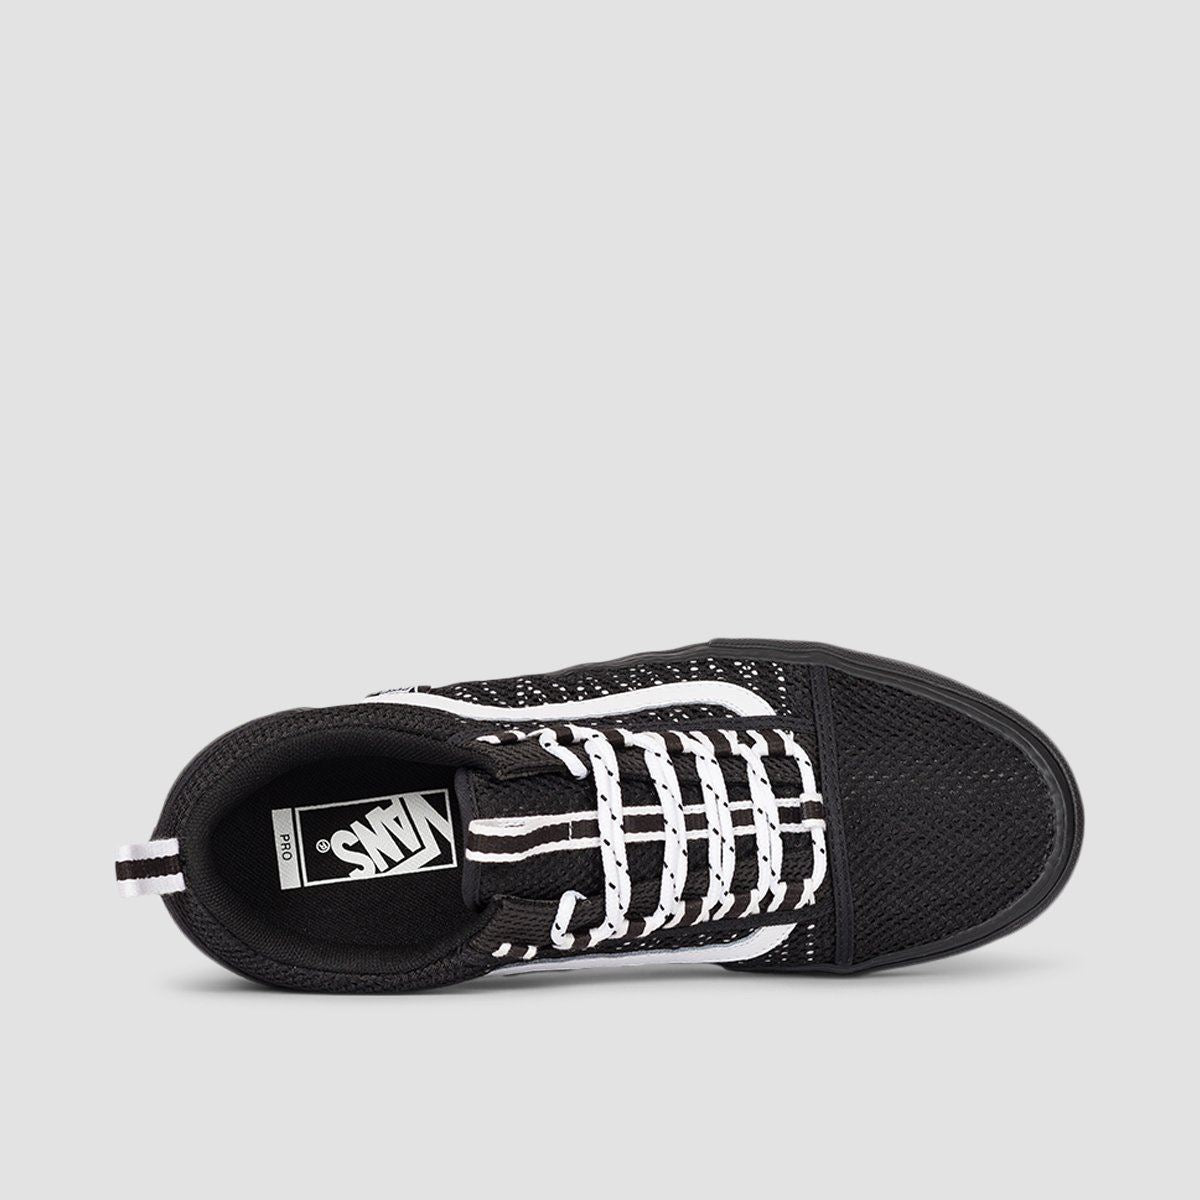 Vans Old Skool Sport Pro Shoes - Black/Black/White